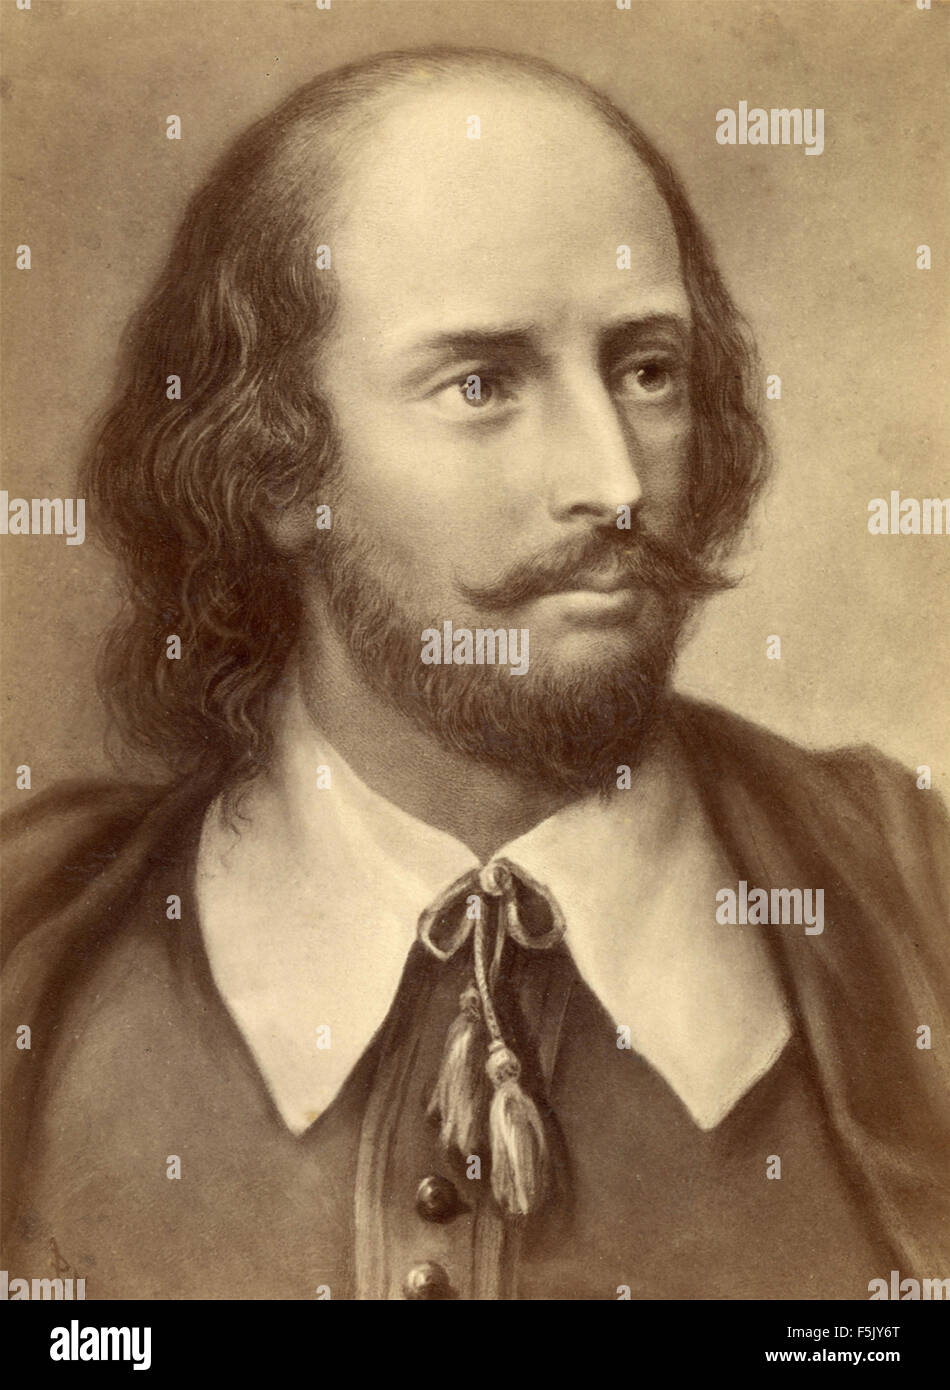 Portrait of William Shakespeare by P. Kramer Stock Photo